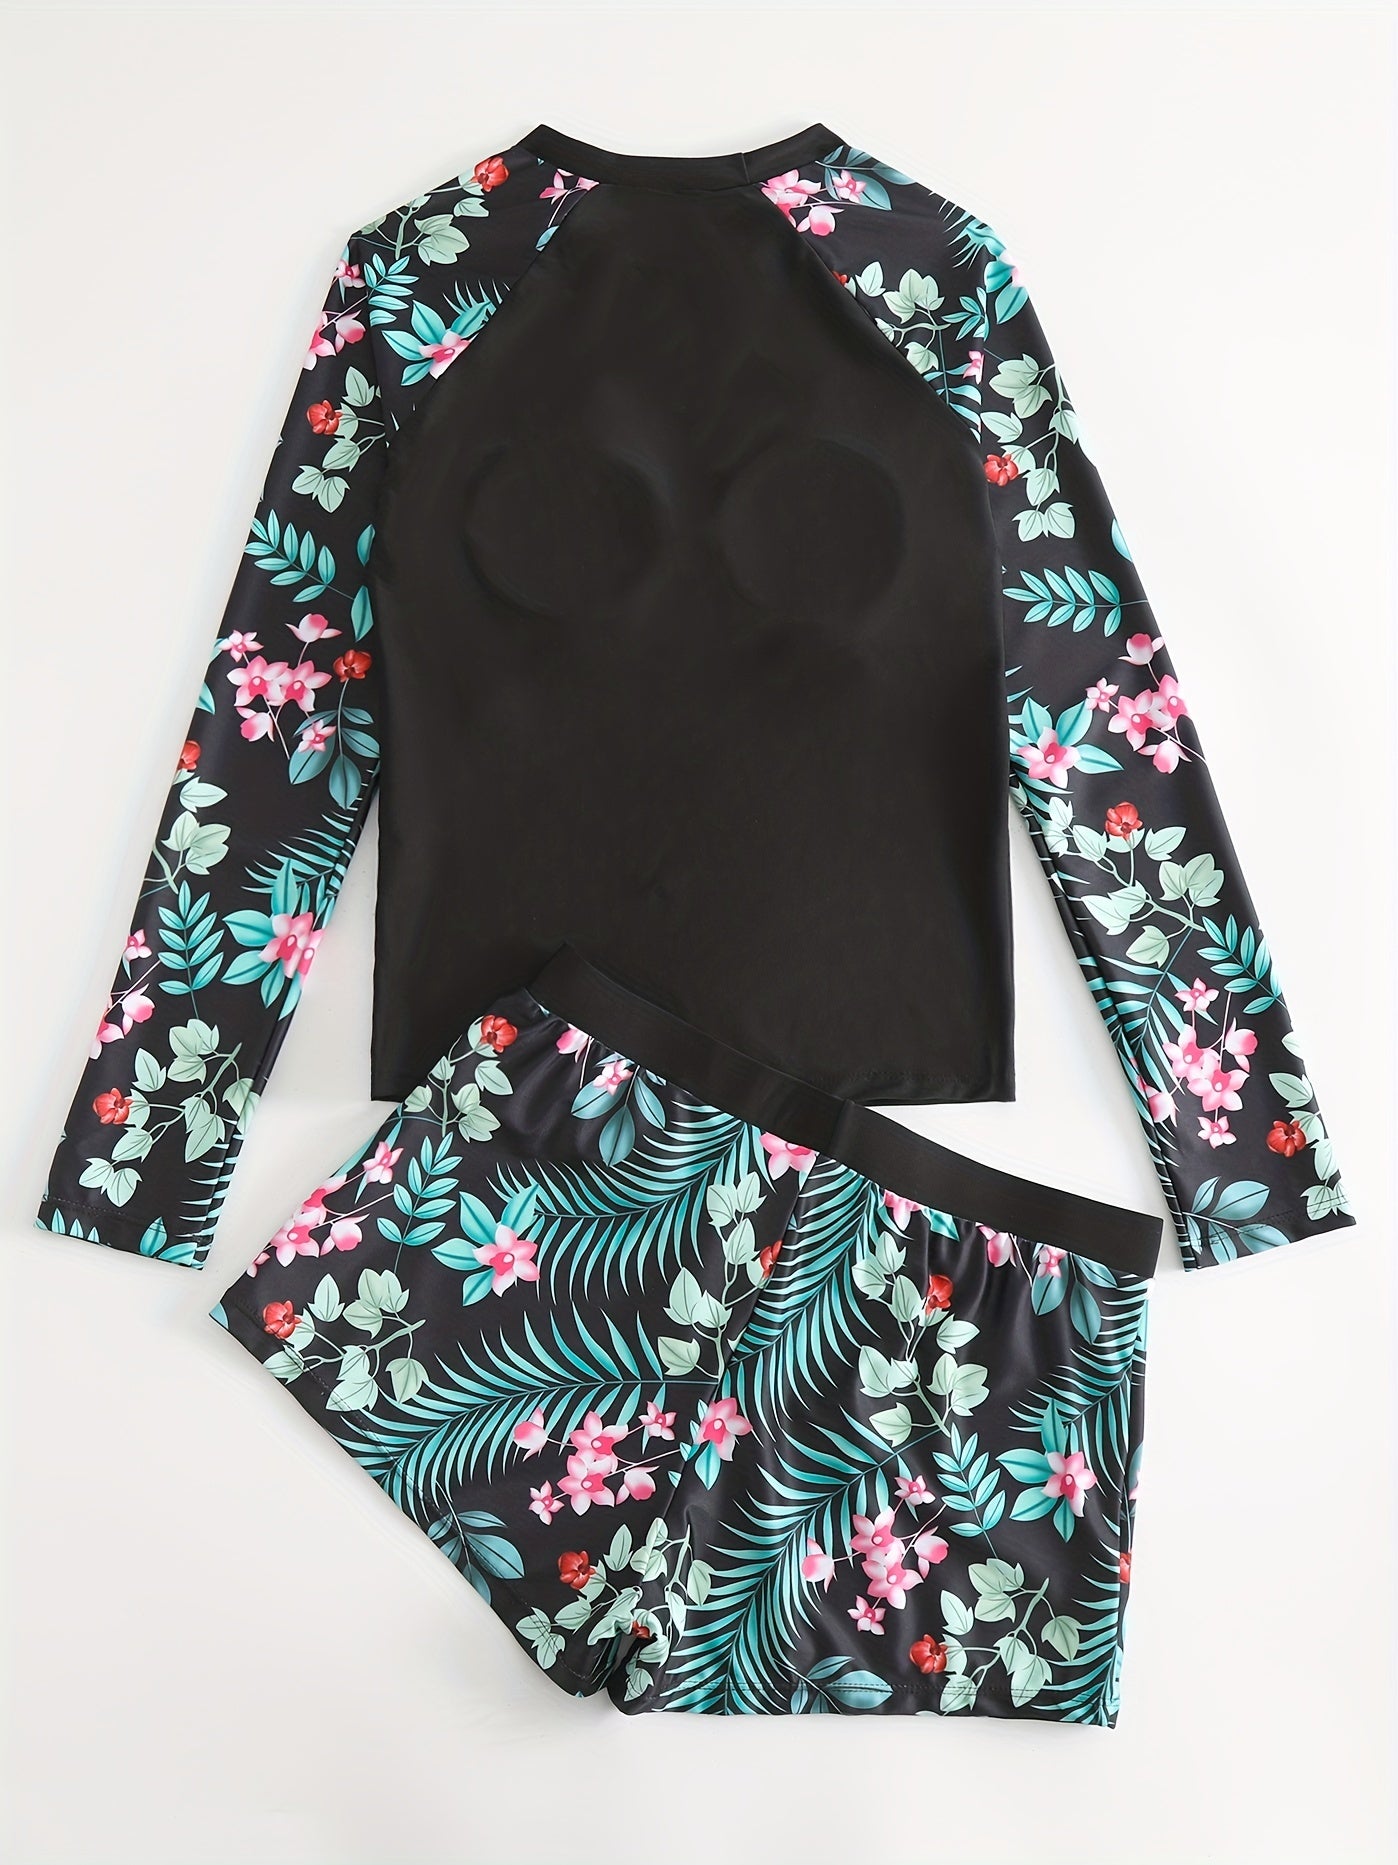 「lovevop」Colorblock Tropical Print Tankini Sets, Long Sleeves Round Neck Rash Guard Boxer Short Bottom Two Pieces Swimsuit, Women's Swimwear & Clothing